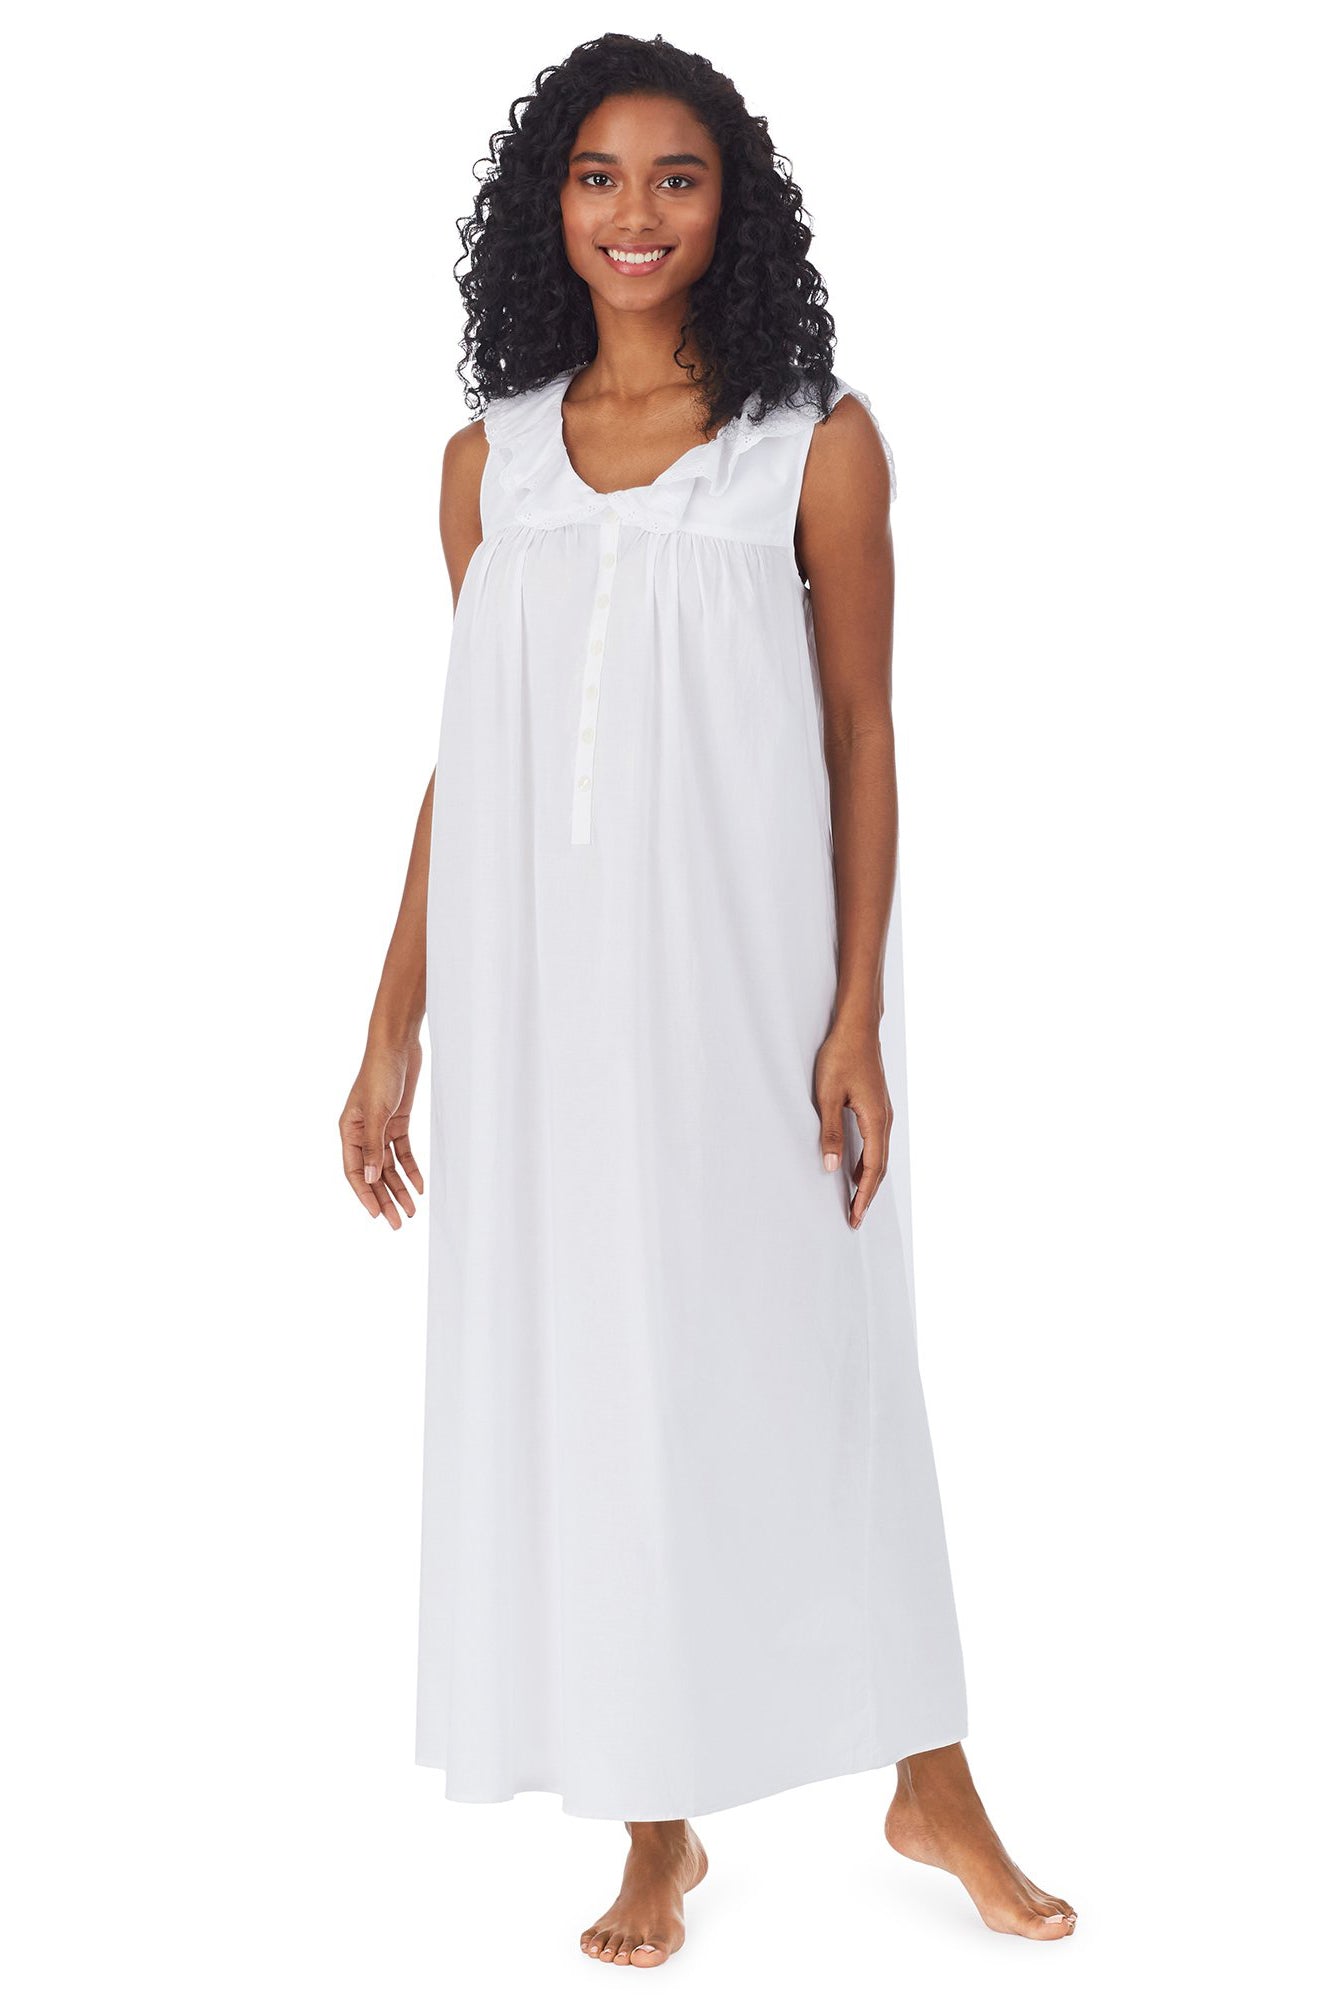 Off-white embroidered cotton dress by mogomogo | The Secret Label